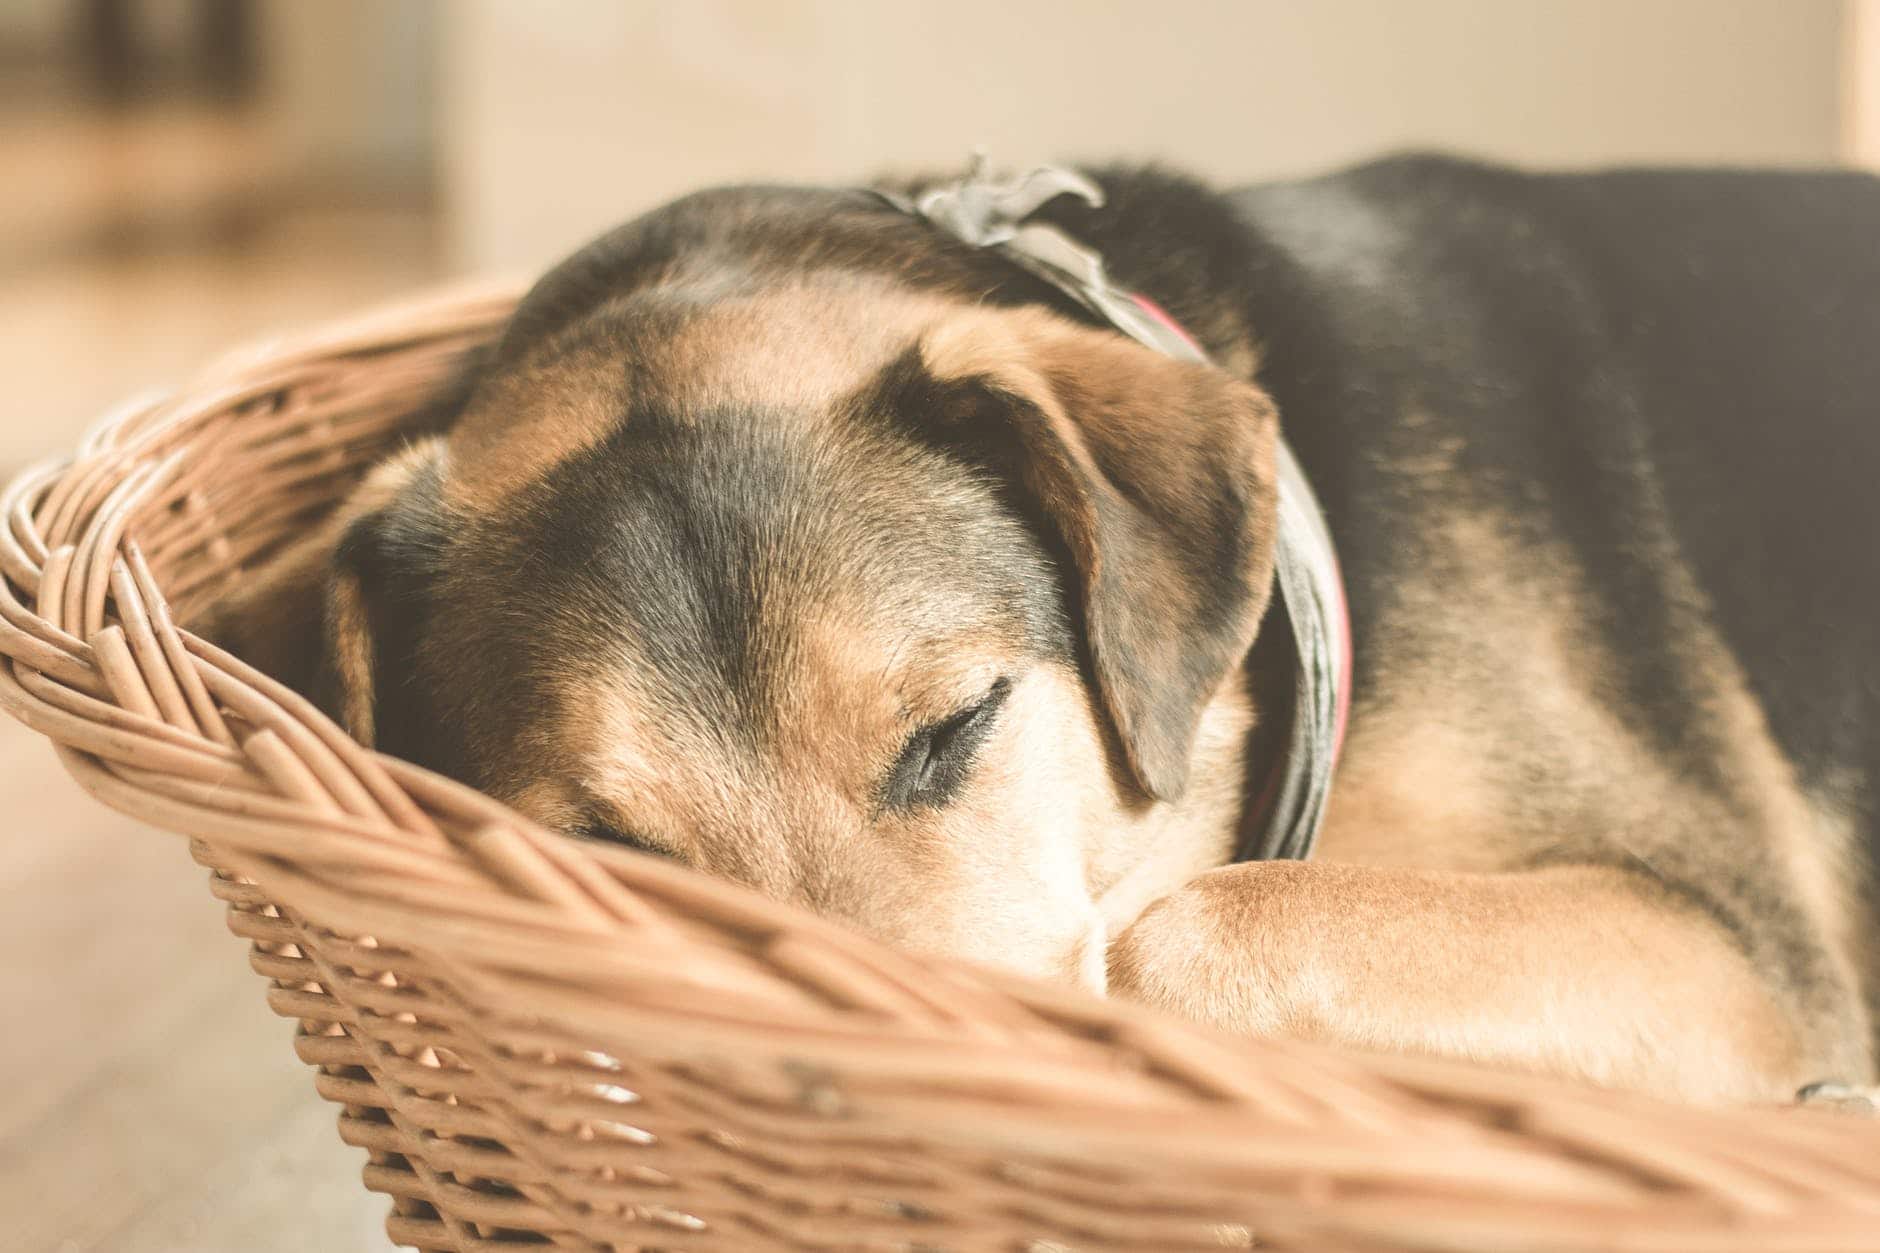 german shepherd puppy sleeping on brown wicker basket close up photo